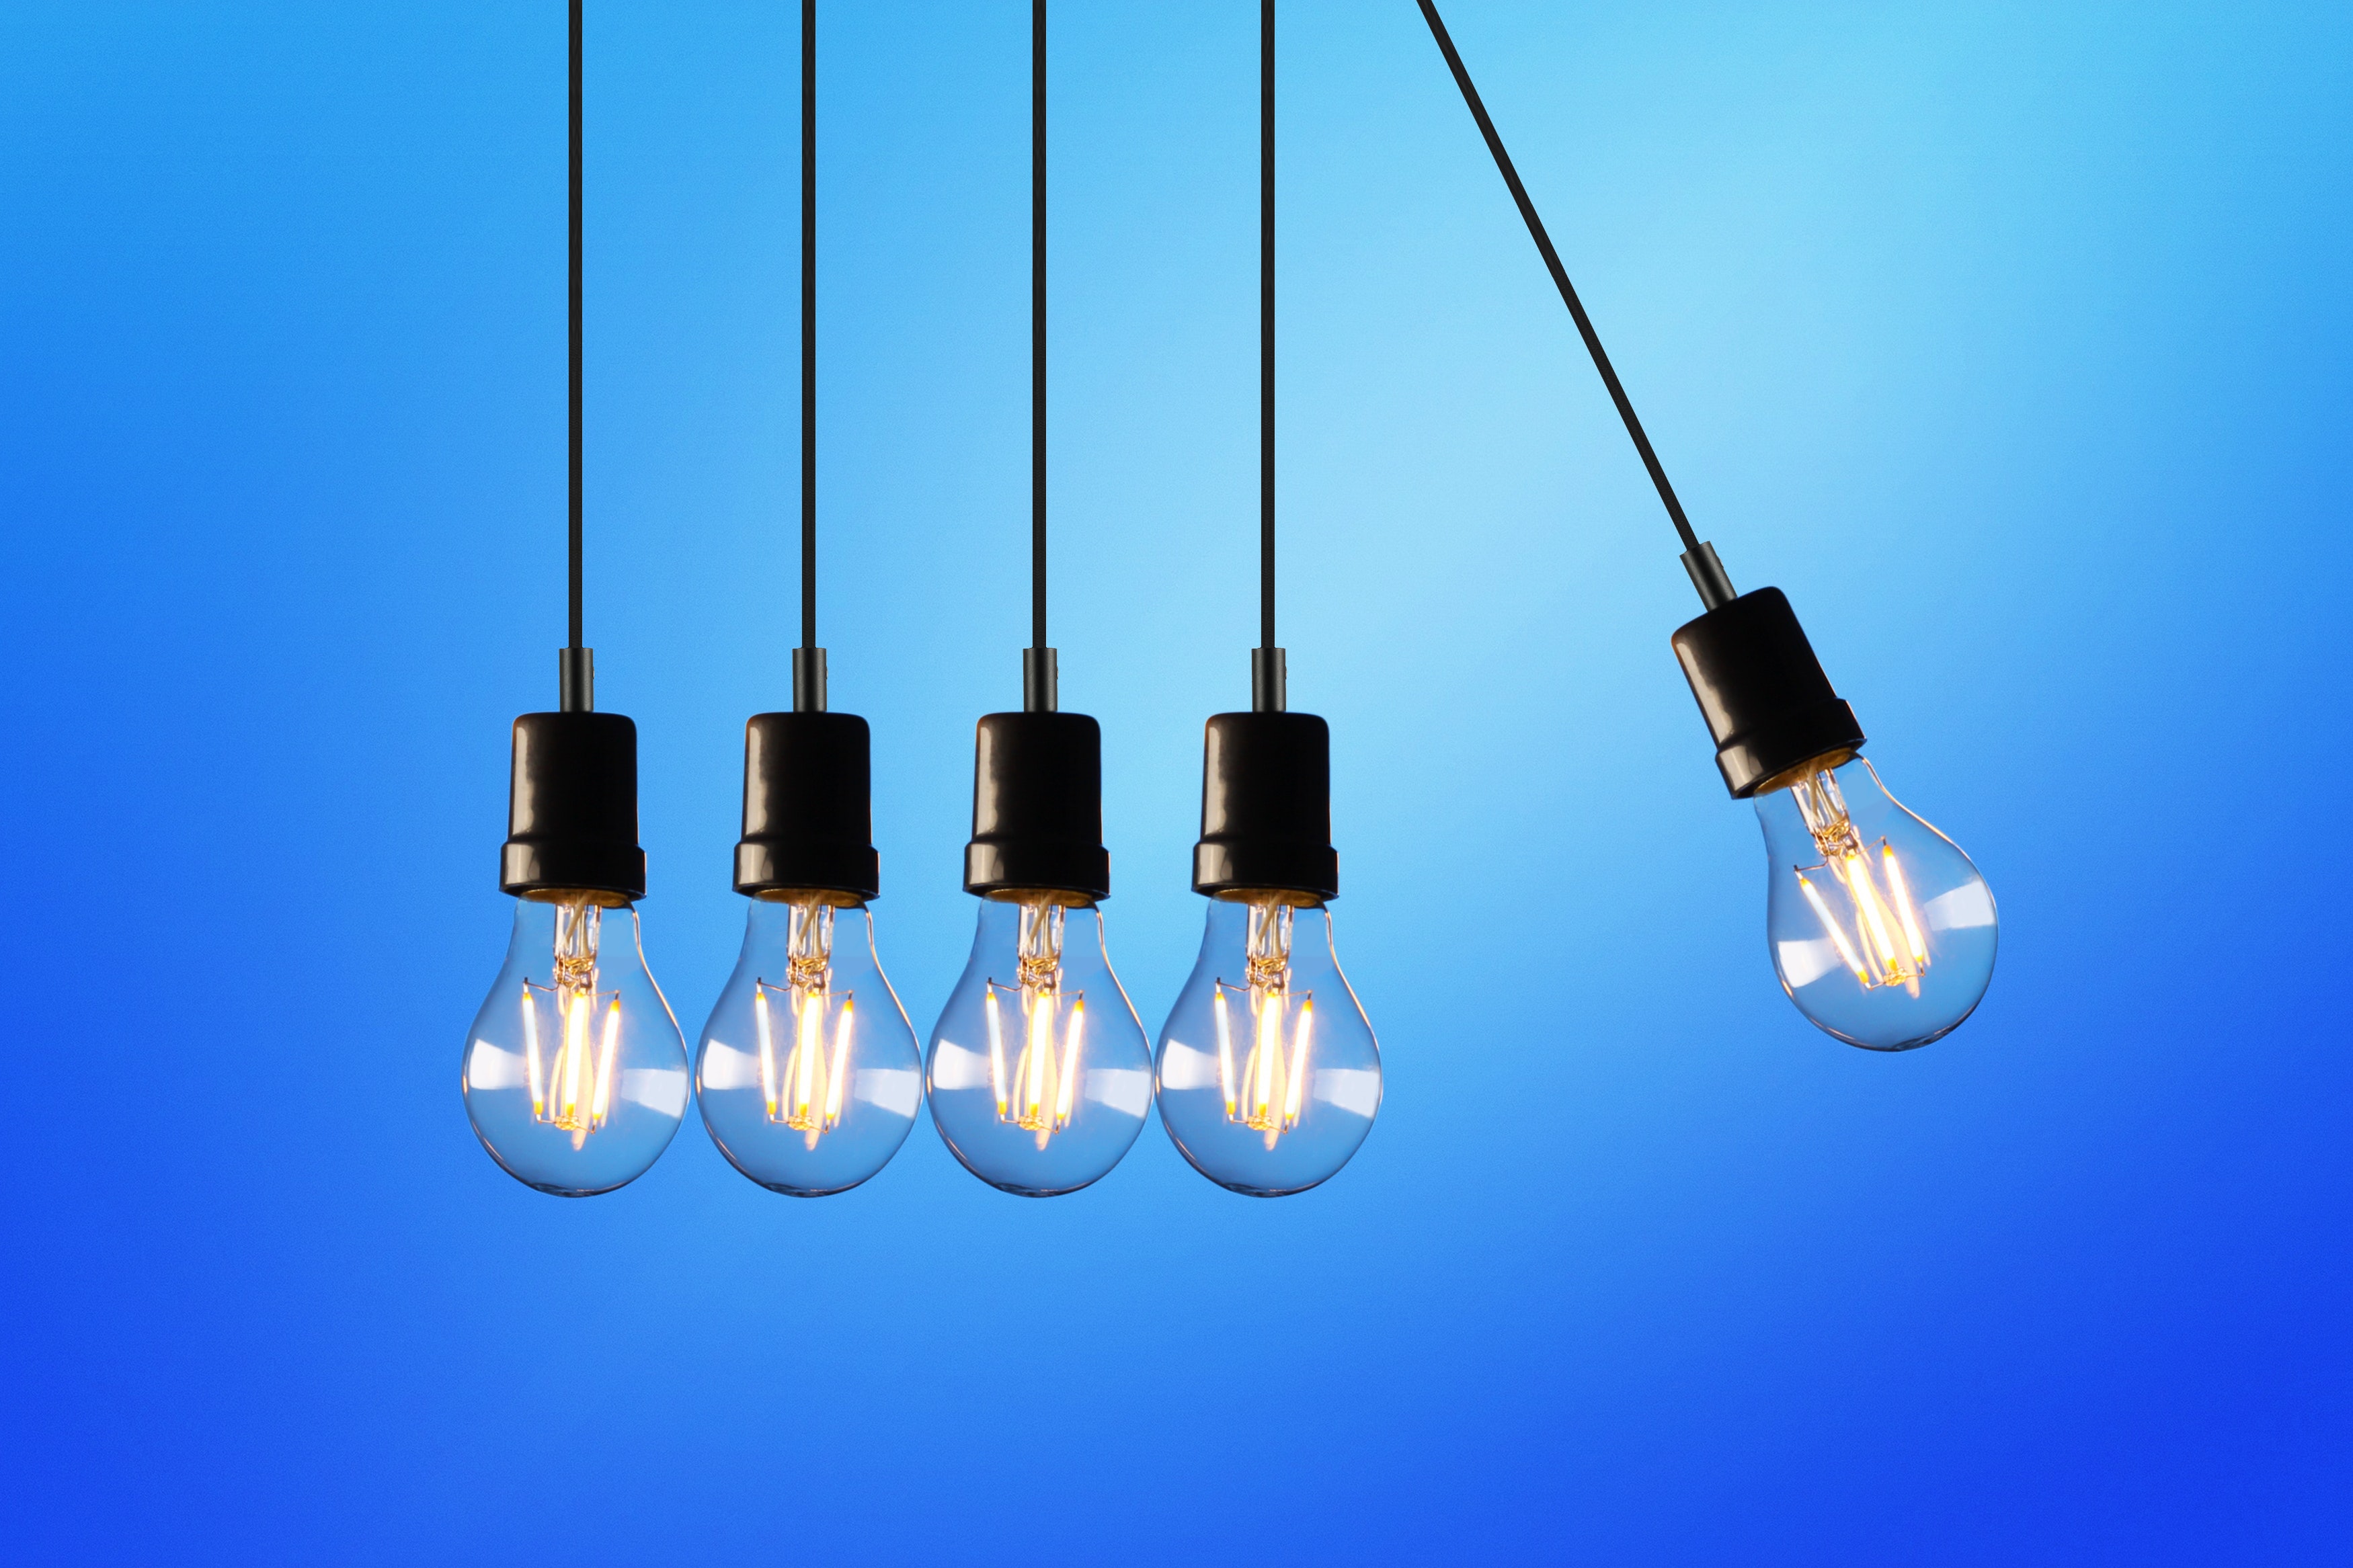 Five lightbulbs in a chain reaction